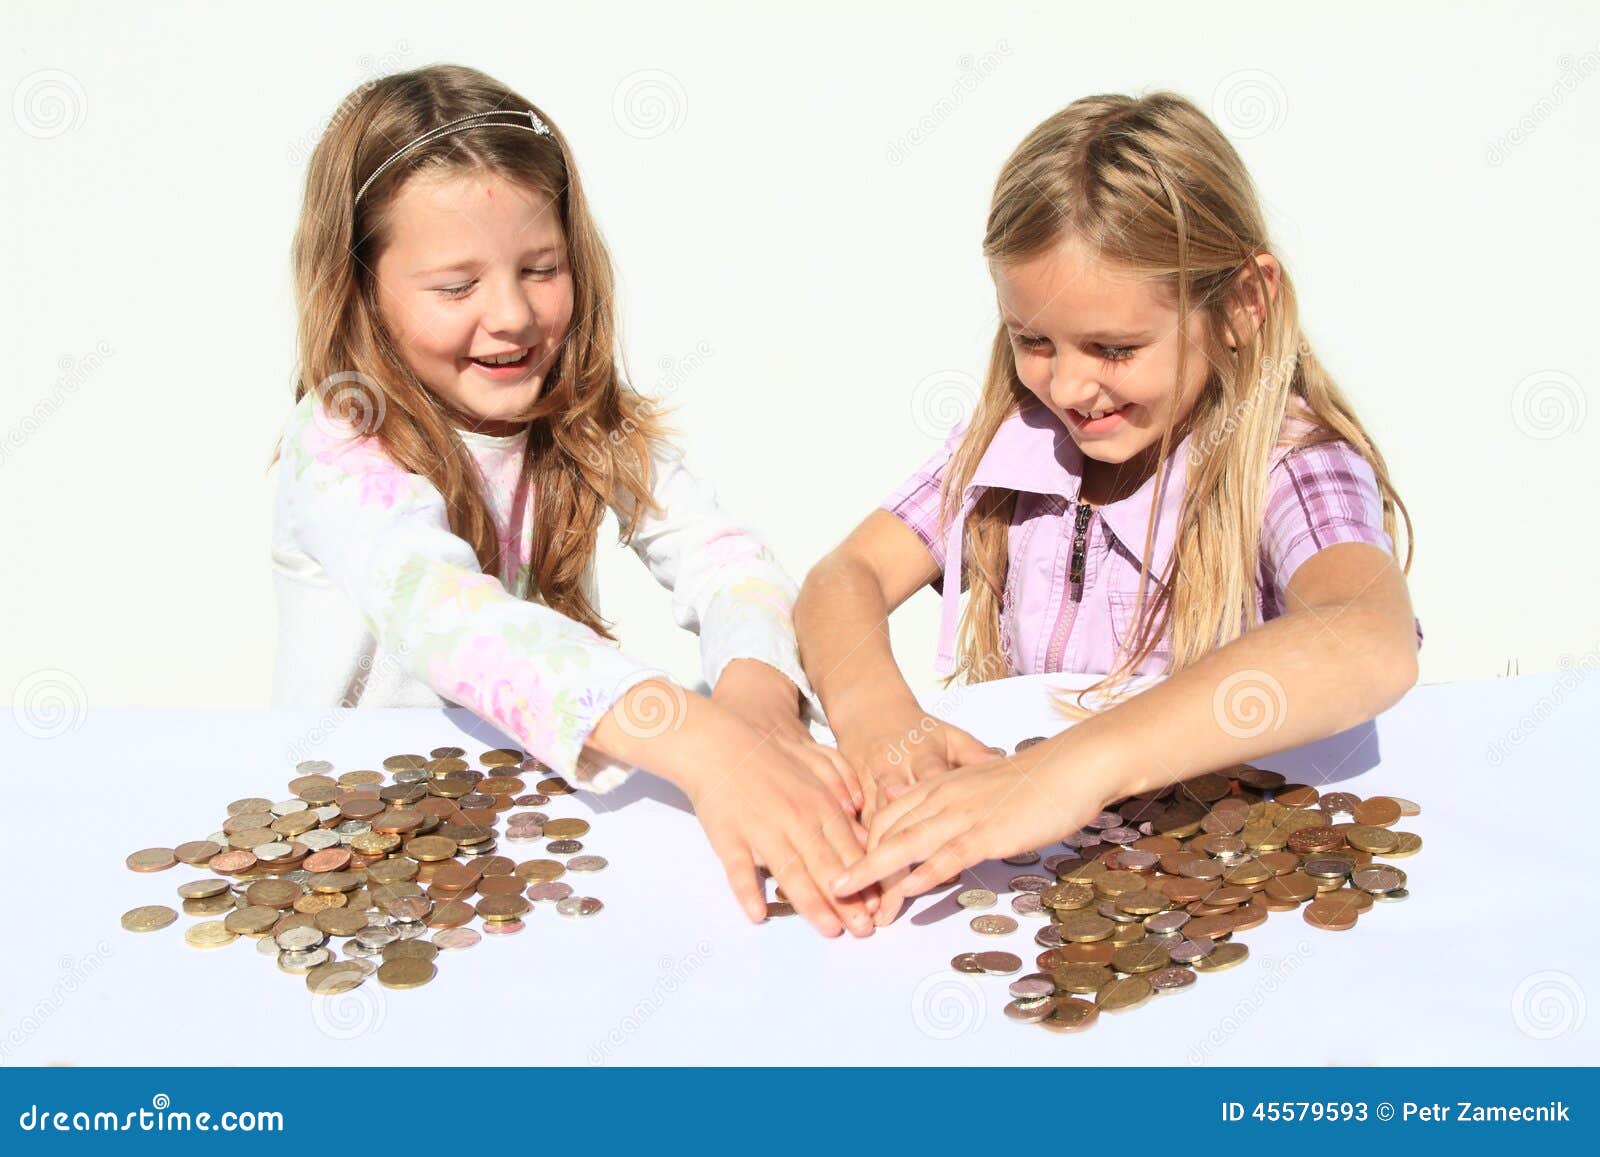 girls dividing money